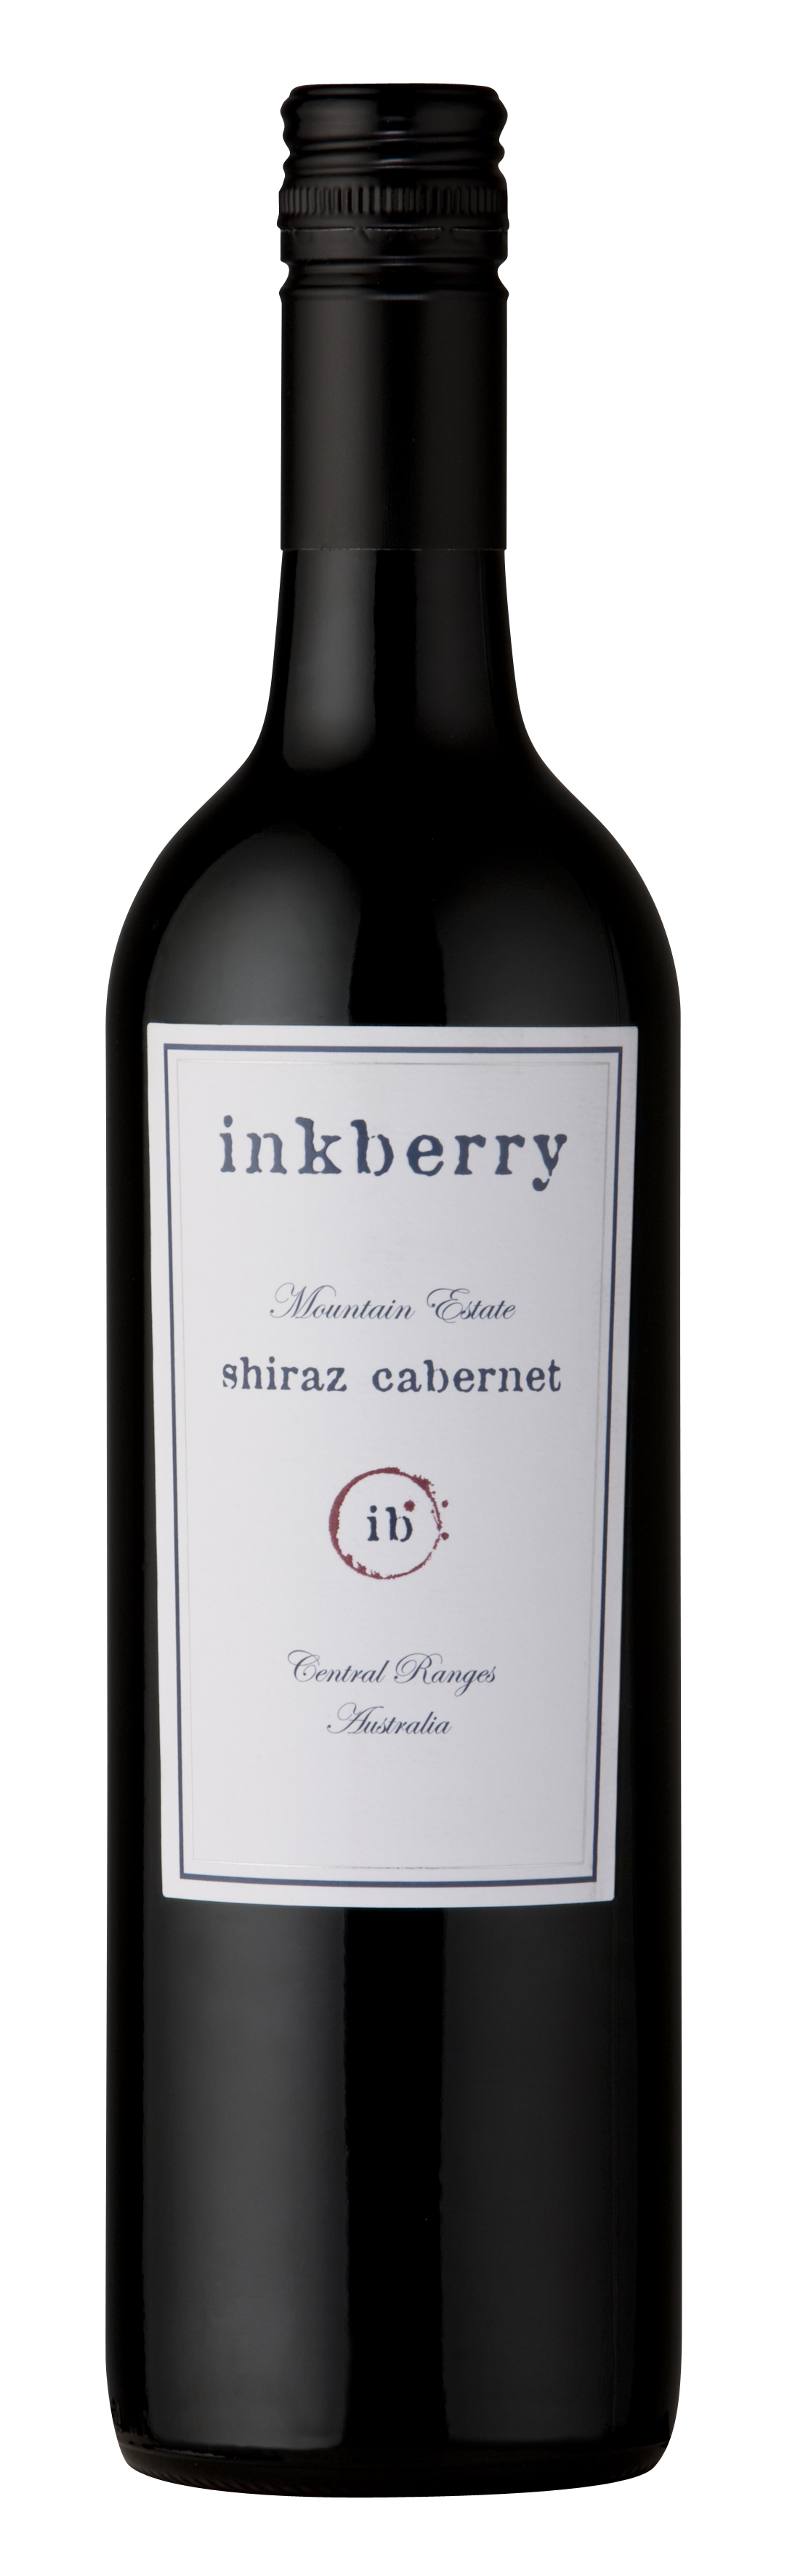 Inkberry Shiraz Cabernet Mountain Estate 2018 750ml